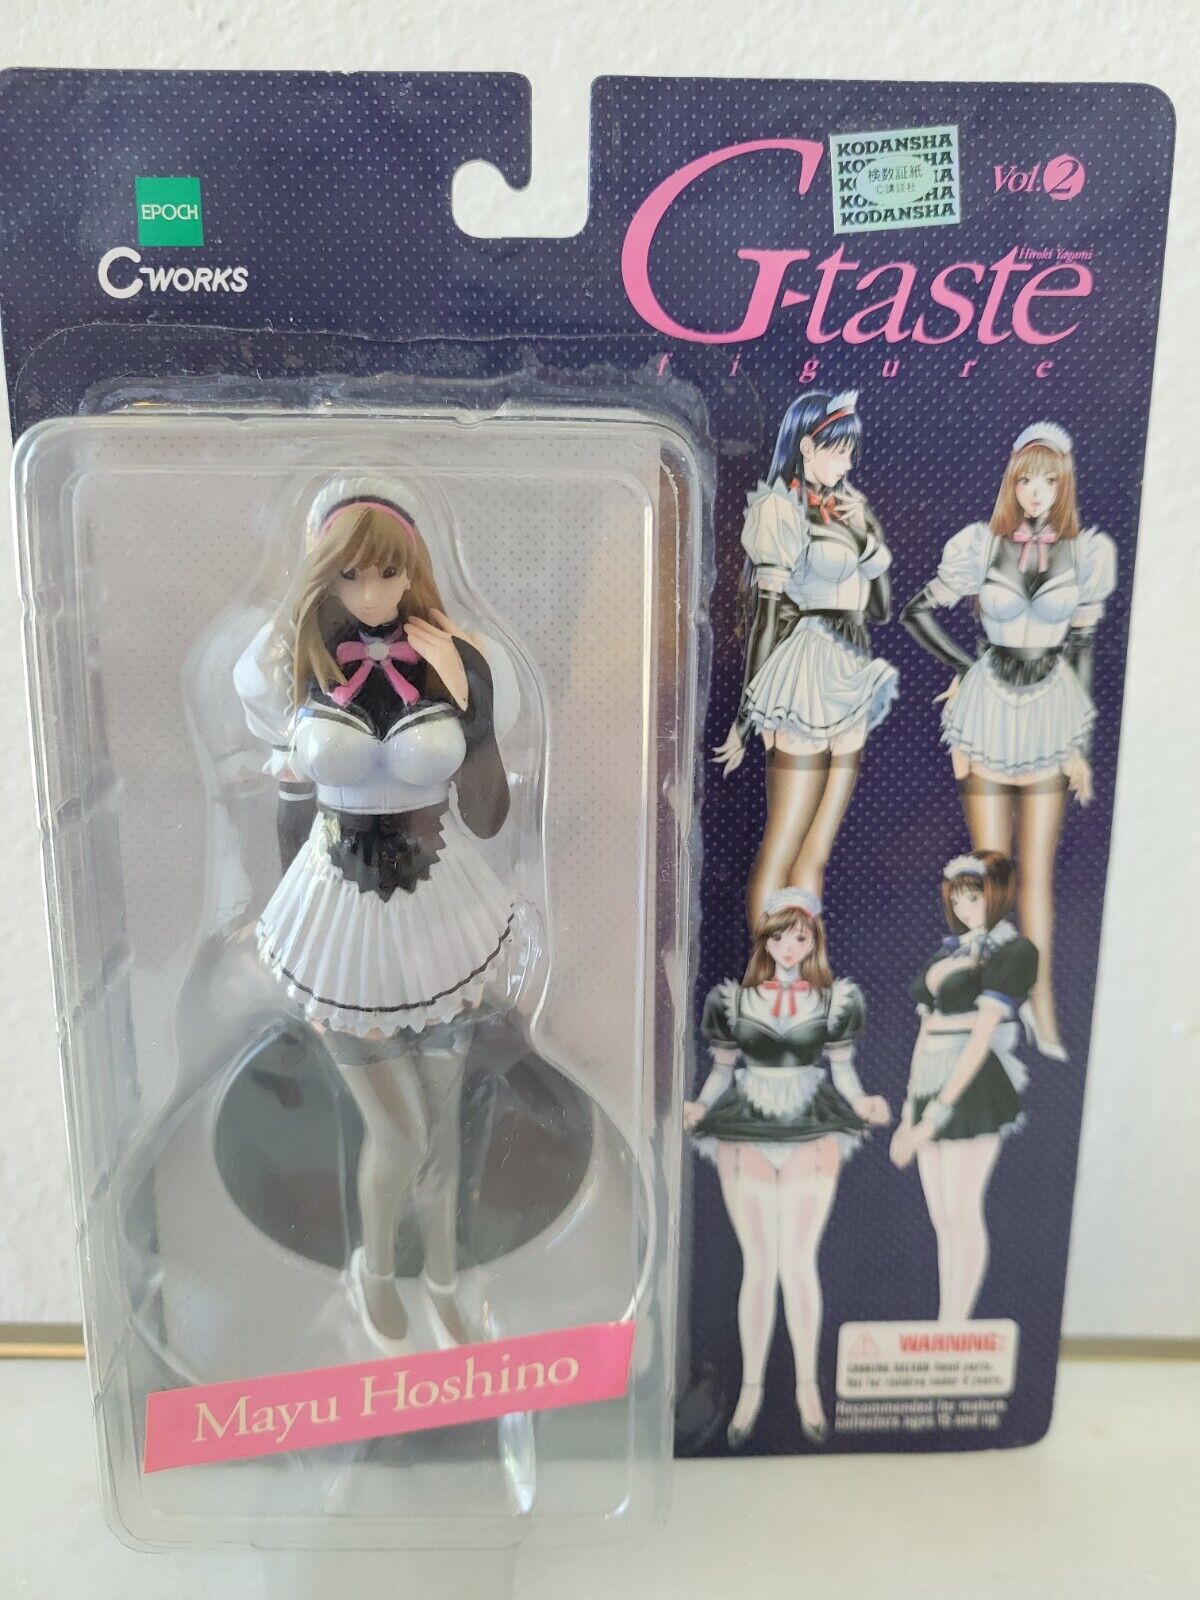 Epoch C-Works G-Taste vol. 2 Mayu Hoshino maid figurine NIB